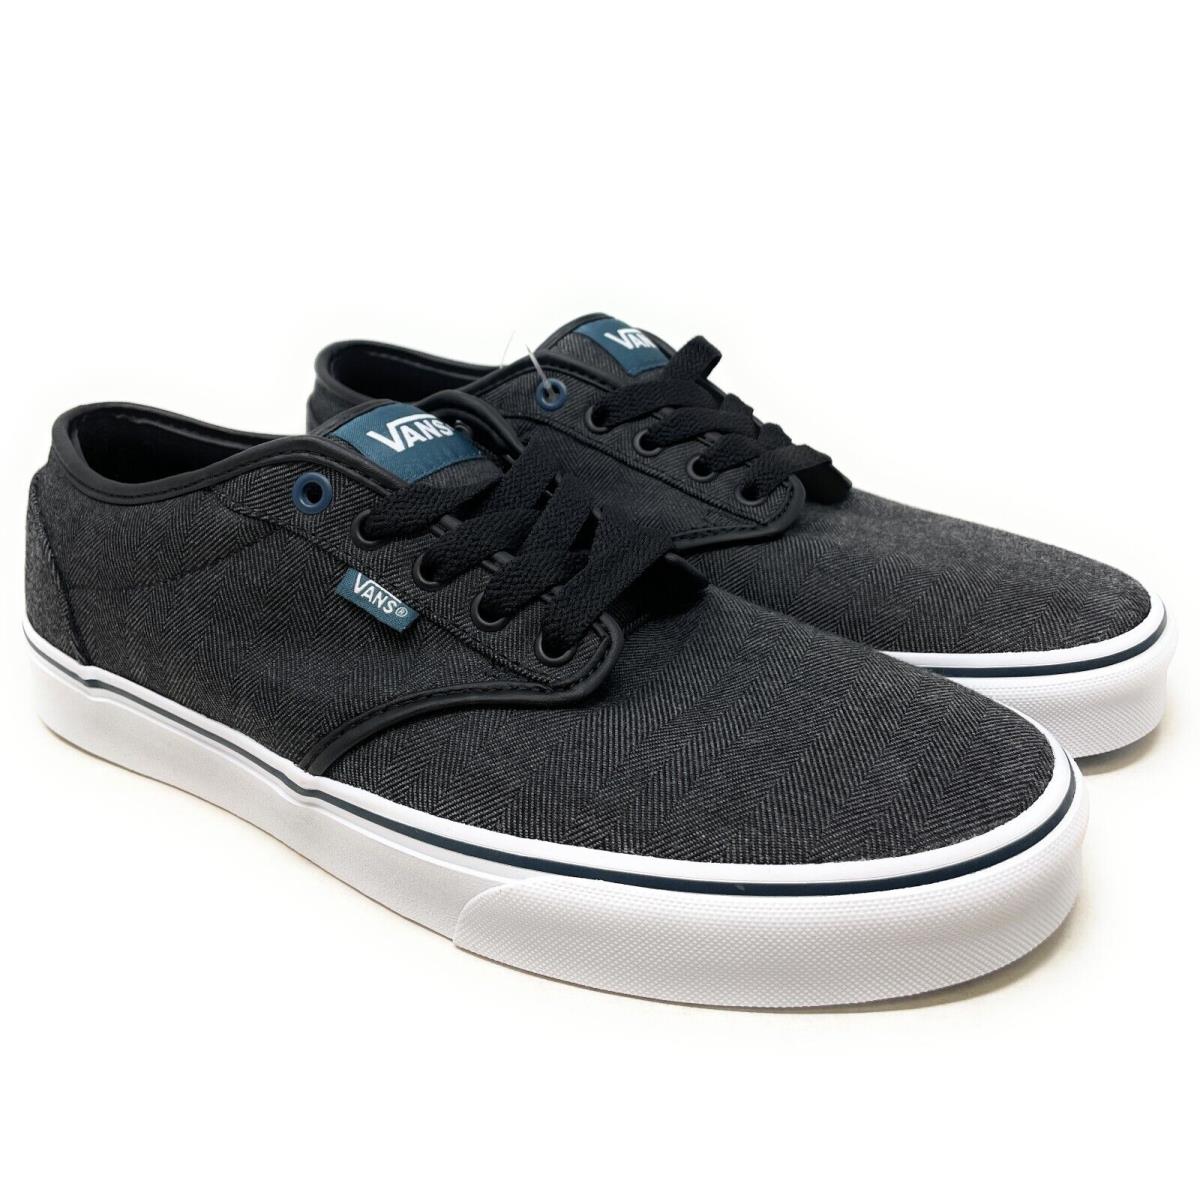 Vans Mens Atwood Skateboarding Shoes Textile Black/orion